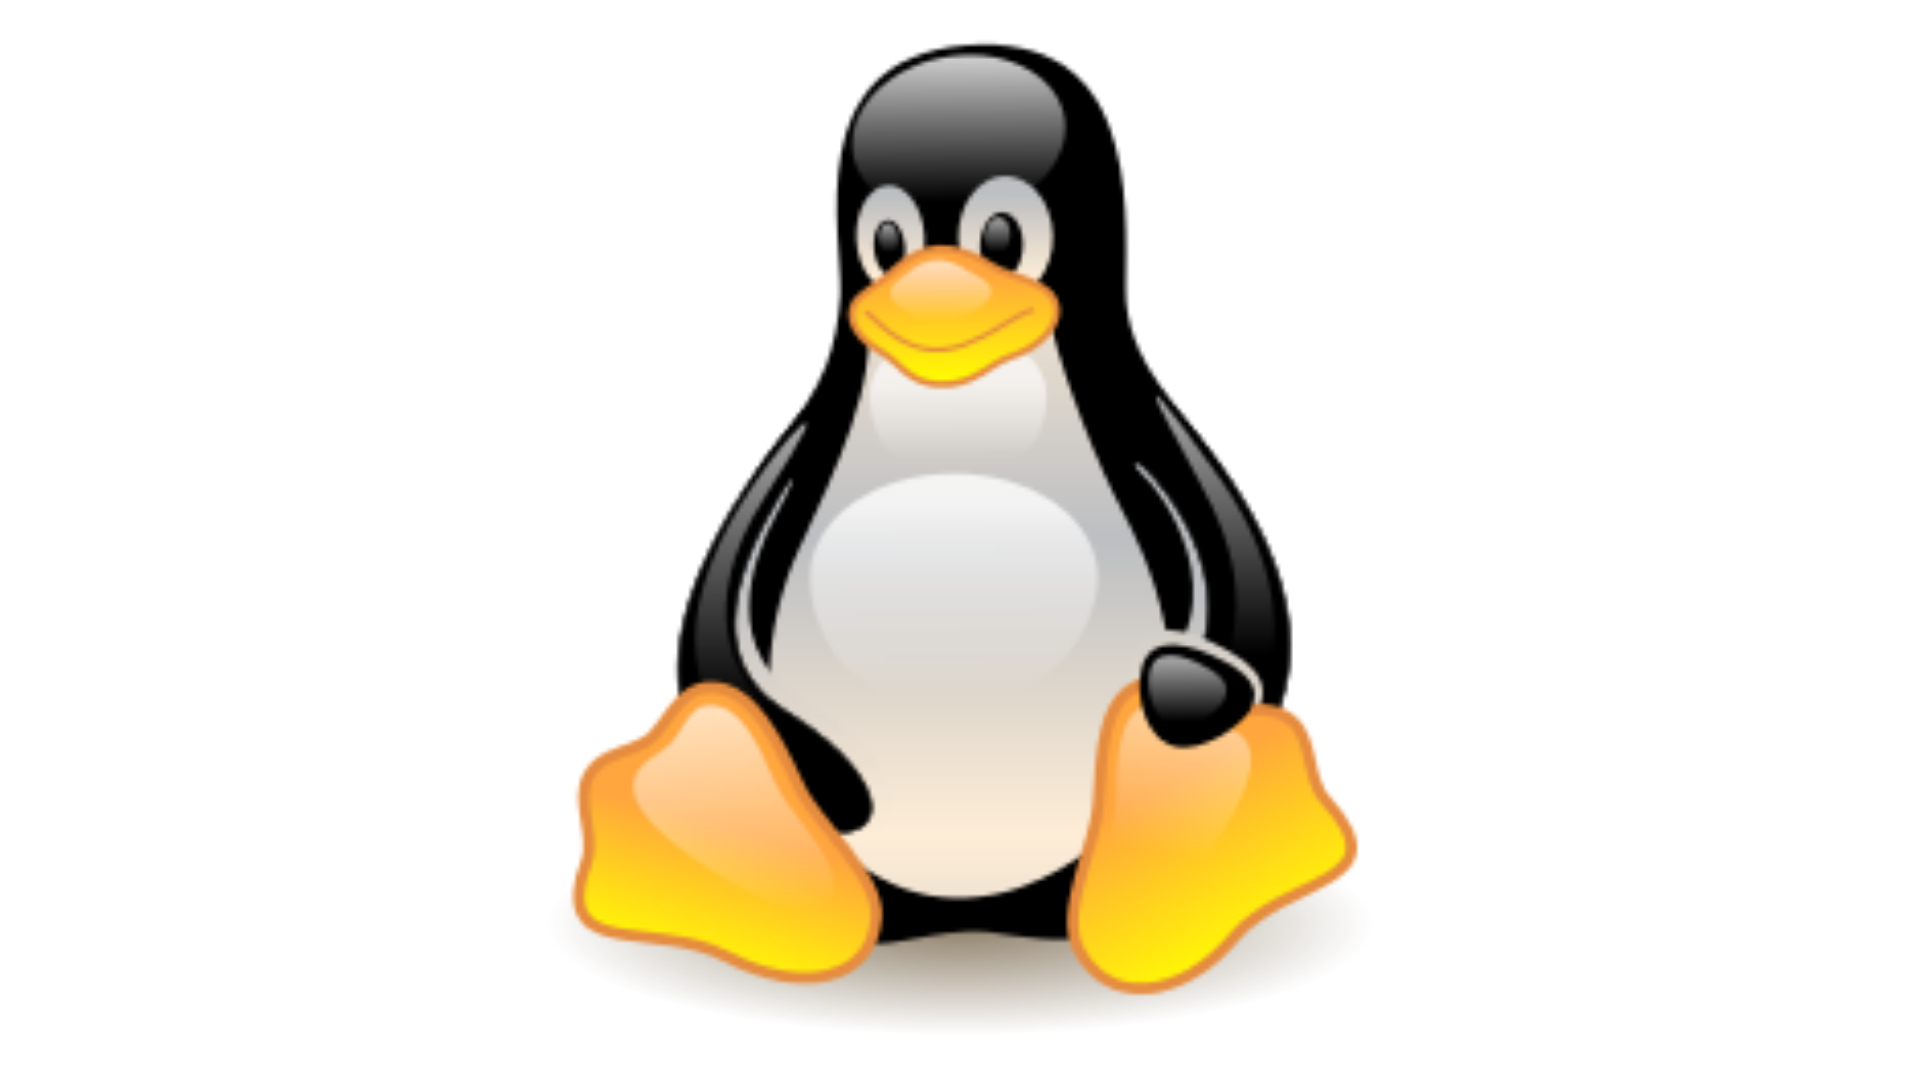 Balena linux. ОС Linux. Юникс линукс. Пингвин линукс. Логотип линукс.